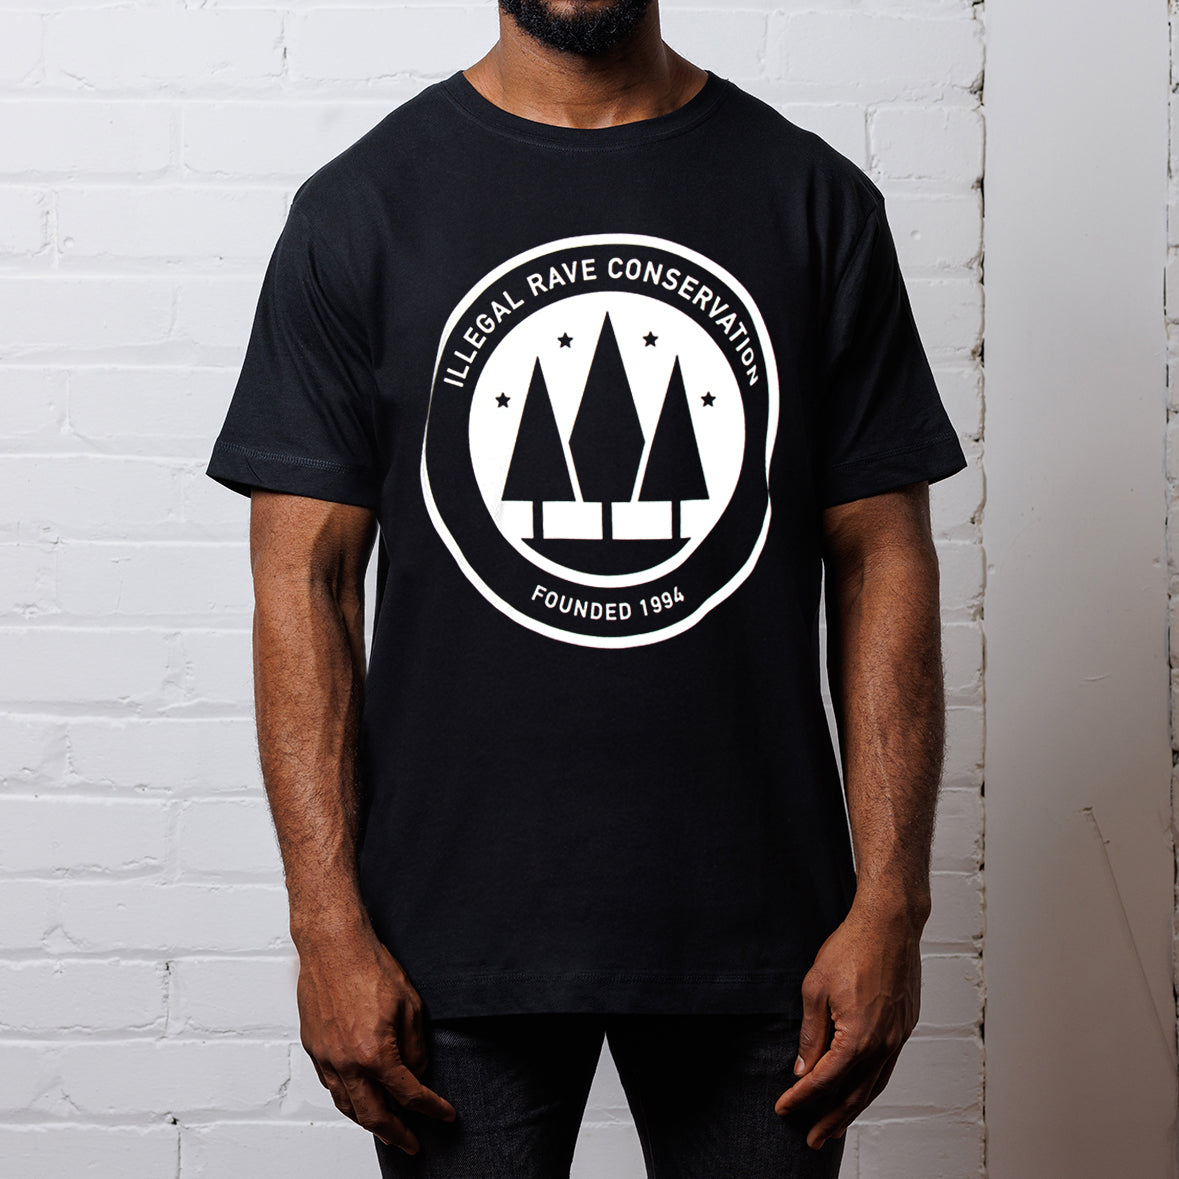 Illegal Rave Conservation Front Print - Tshirt - Black